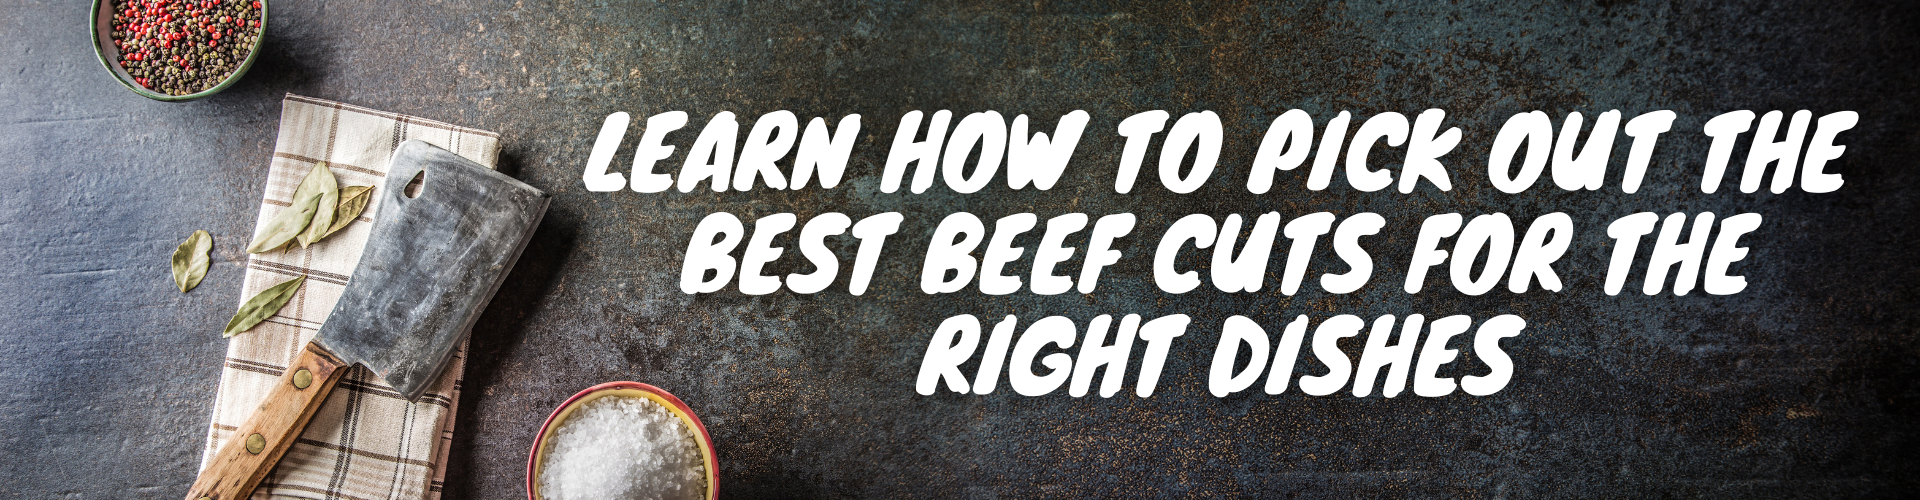 Beef Cuts Blog